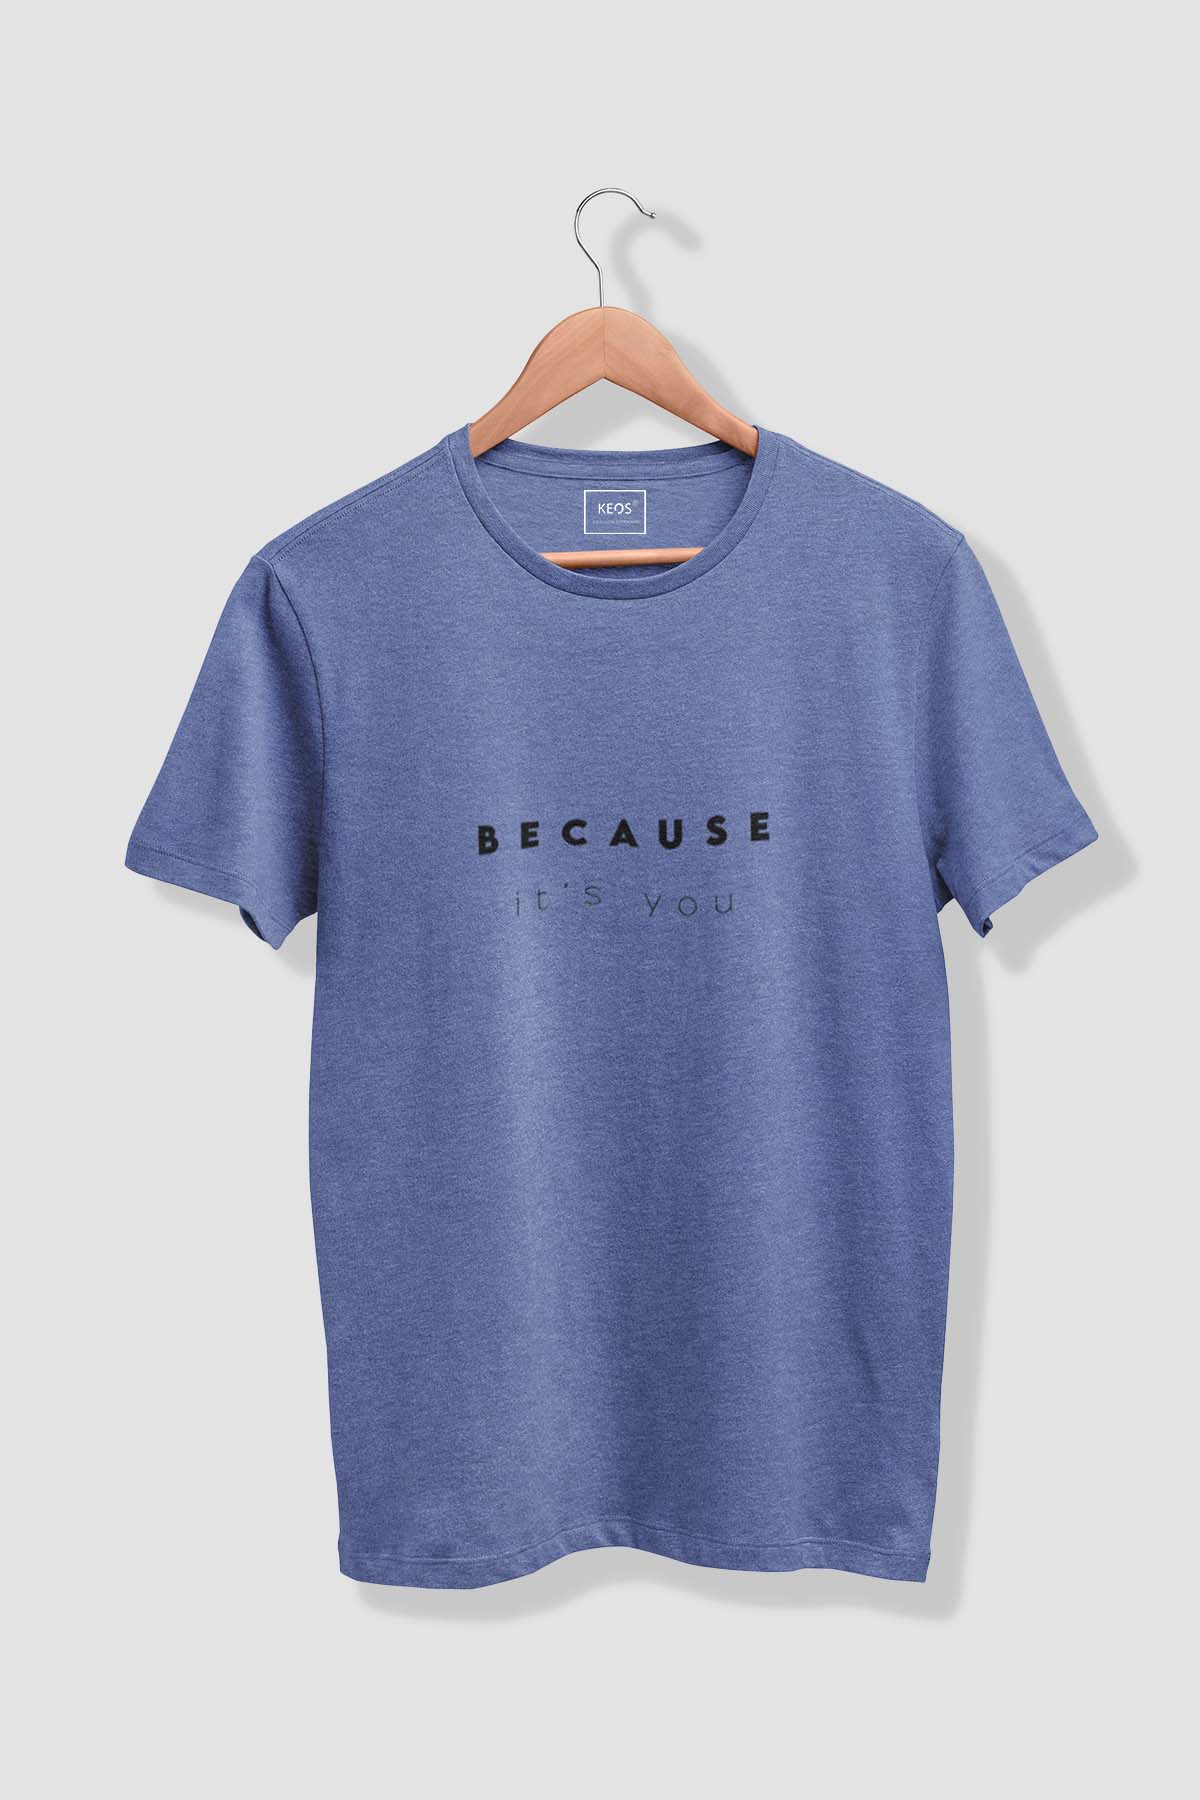 Because it's you - Melange Cotton T-shirt - keos.life